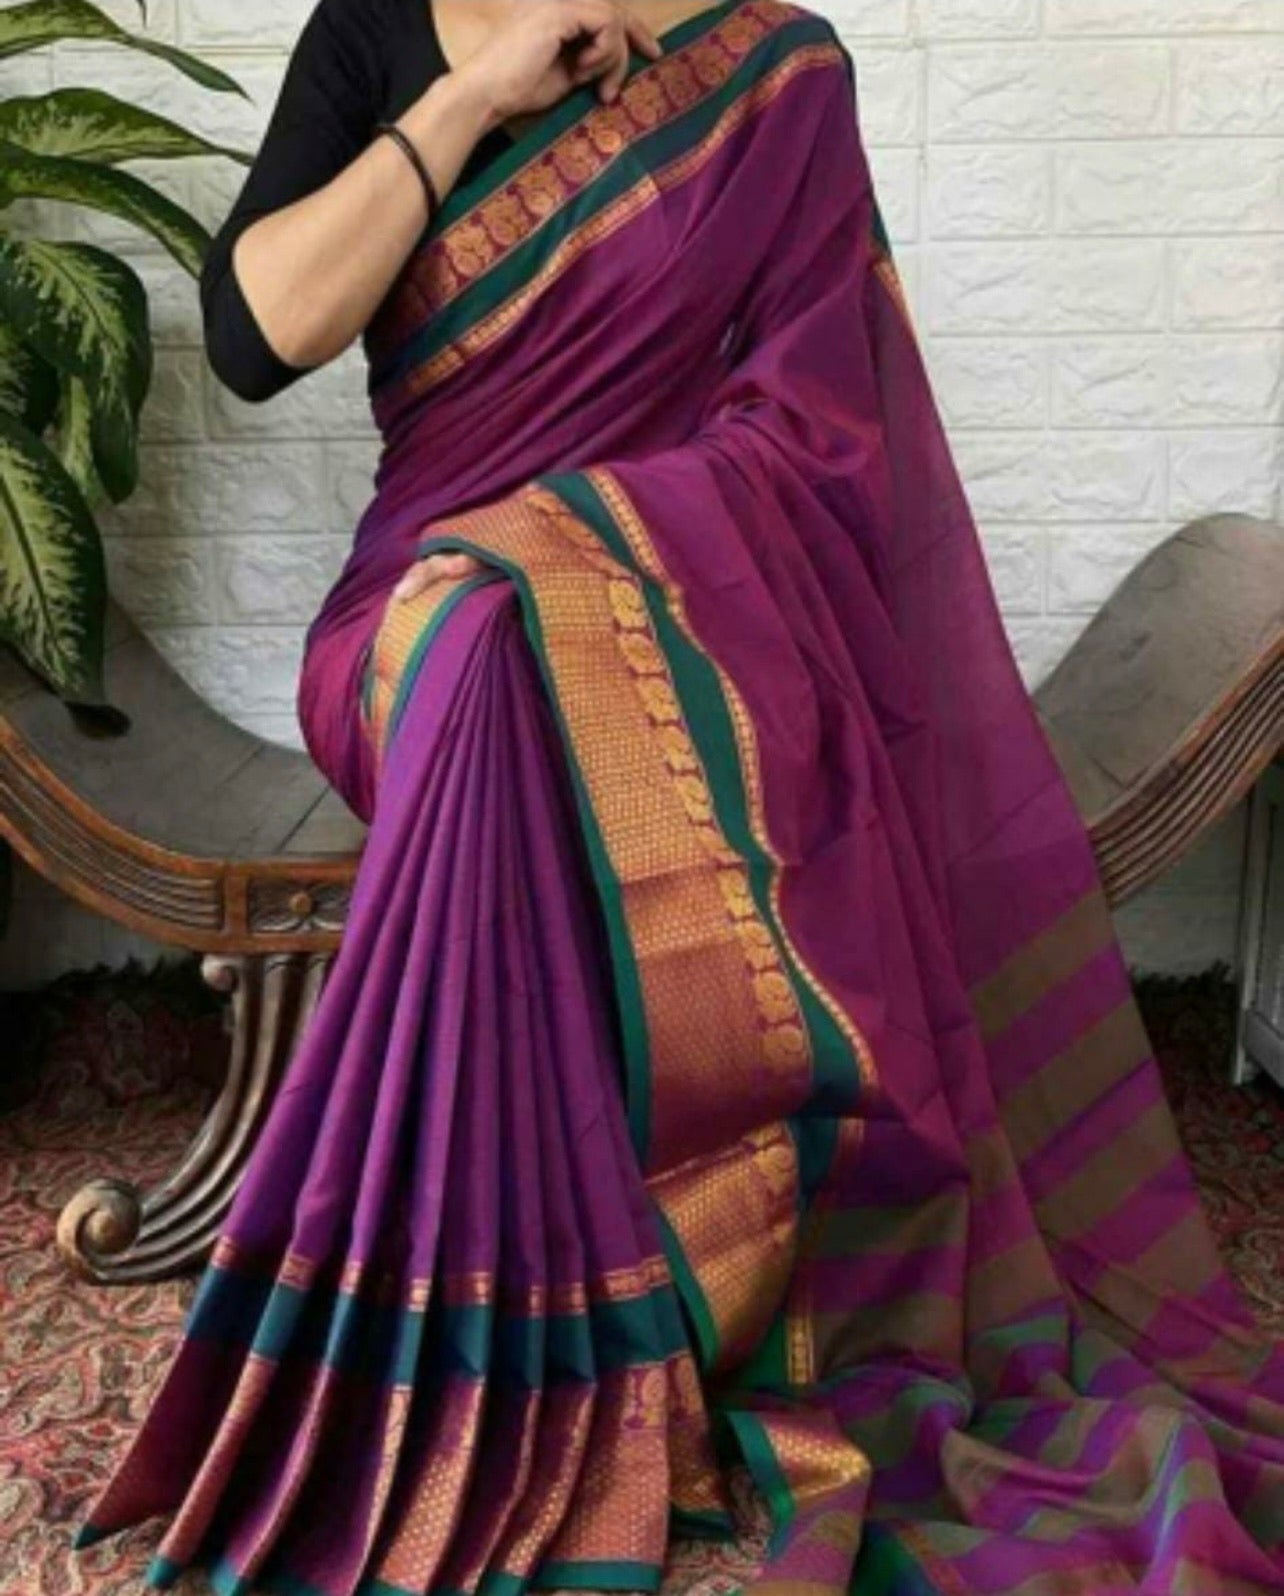 Ikkal Cotton / Narayanpet Cotton Saree - Purple